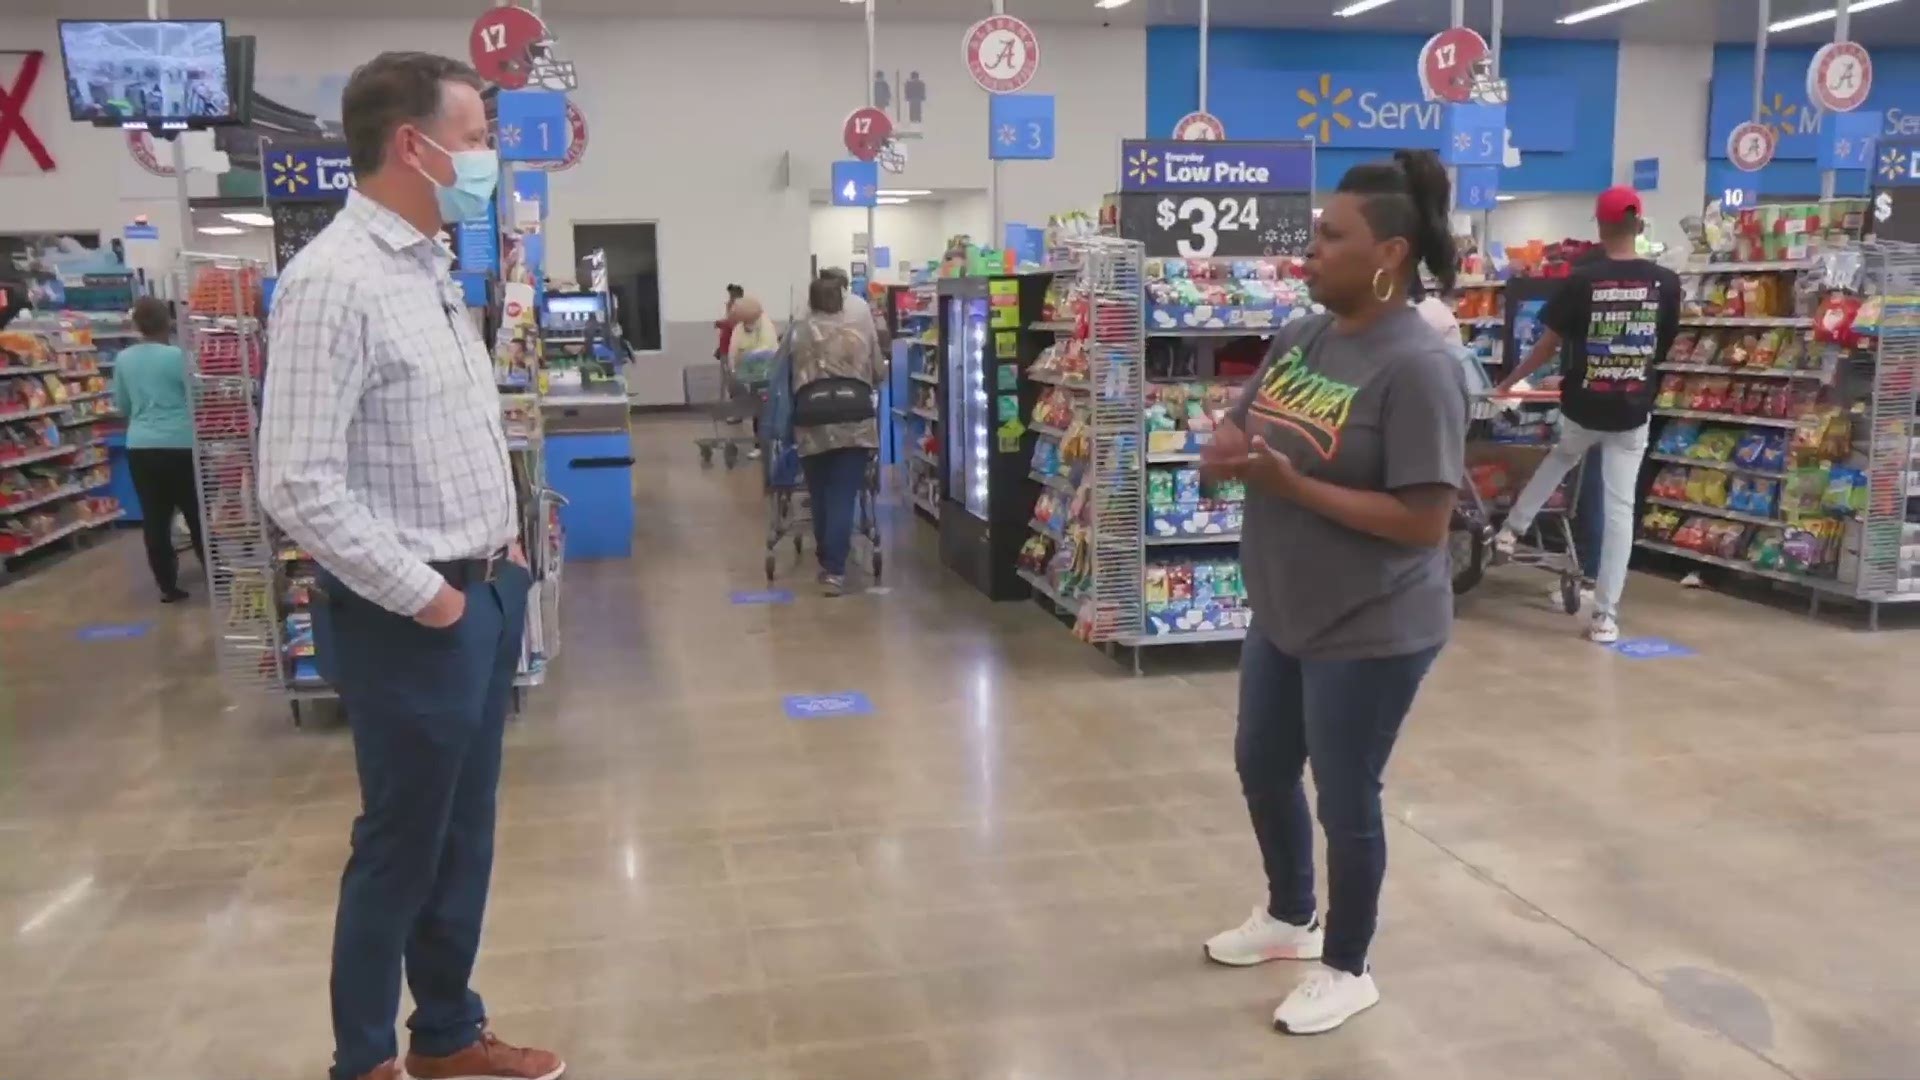 Walmart has provided a virtual tour to share the precautions its store has taken amid the coronavirus pandemic.